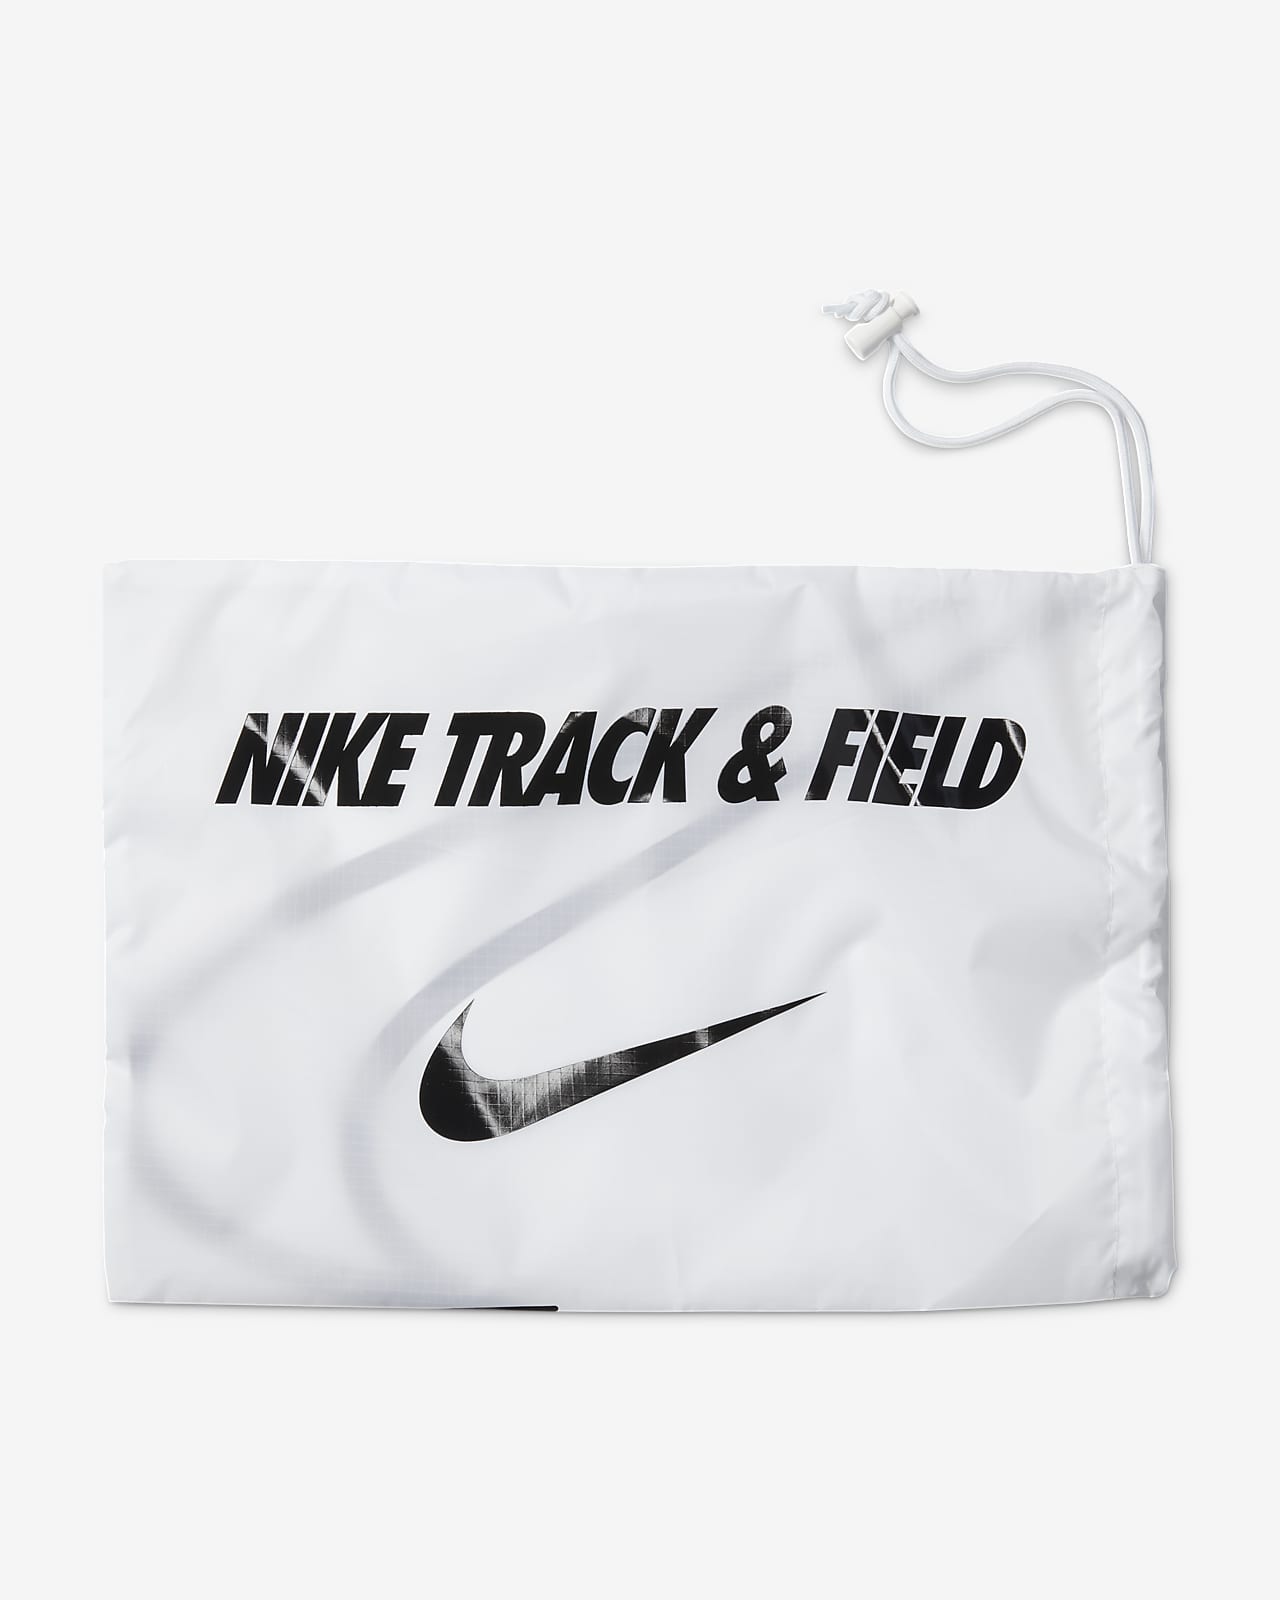 Nike Swoosh Road Racing Track & Field Sports Bras.